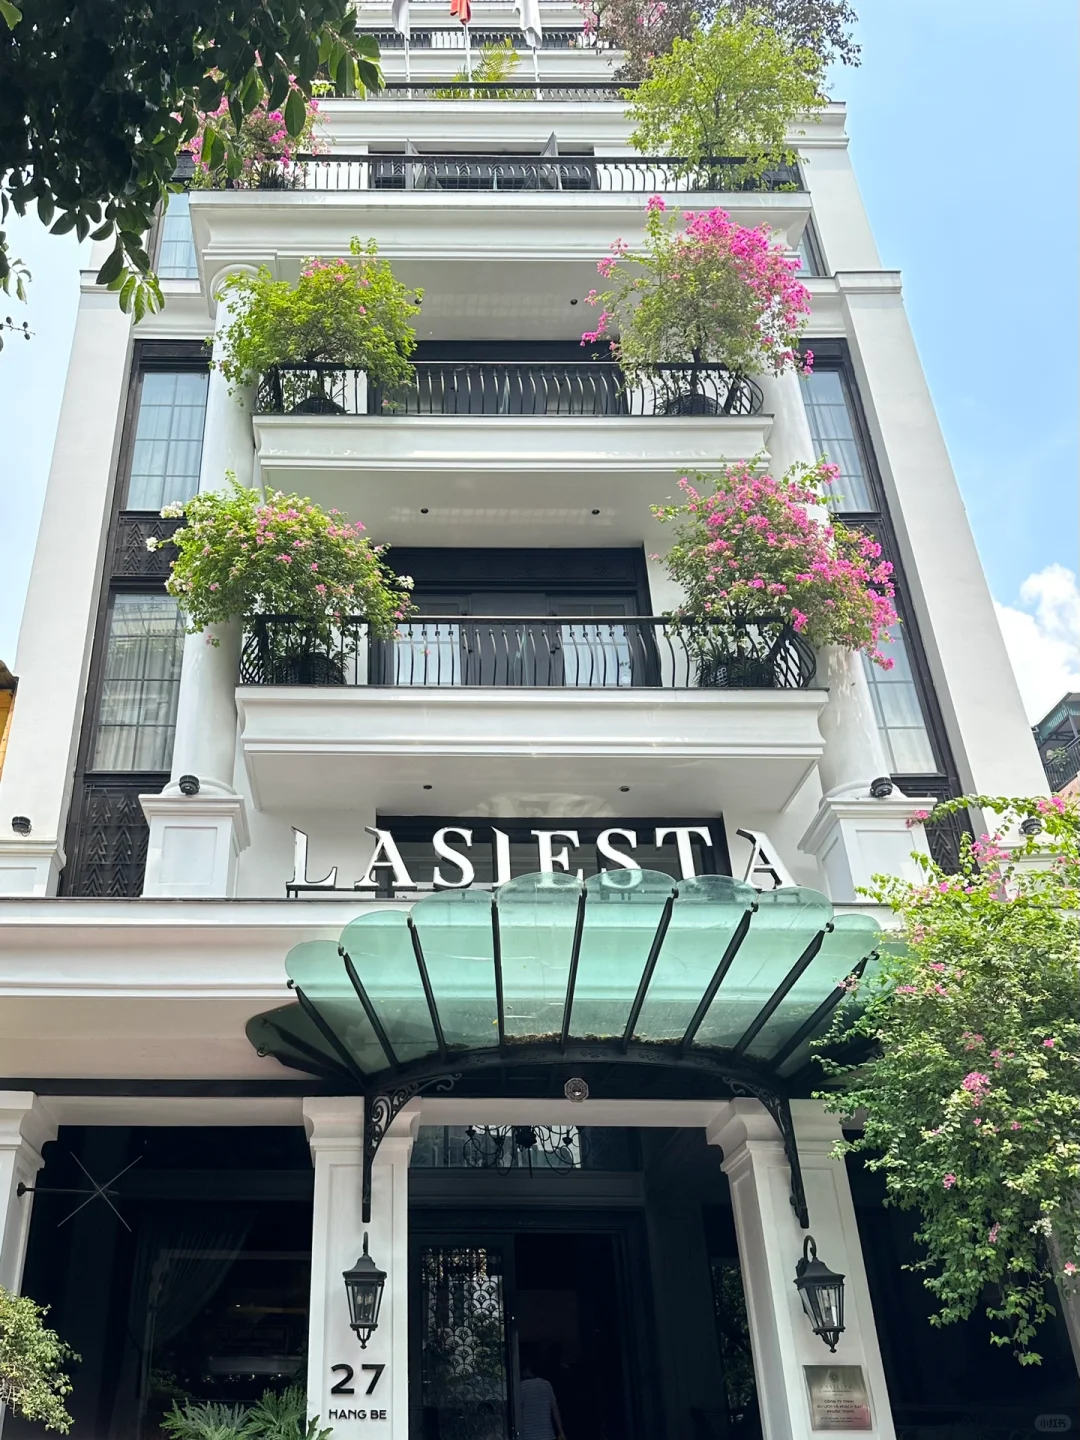 Hanoi-La Siesta Premium Hàng Be hotel, a master-style hotel in the city